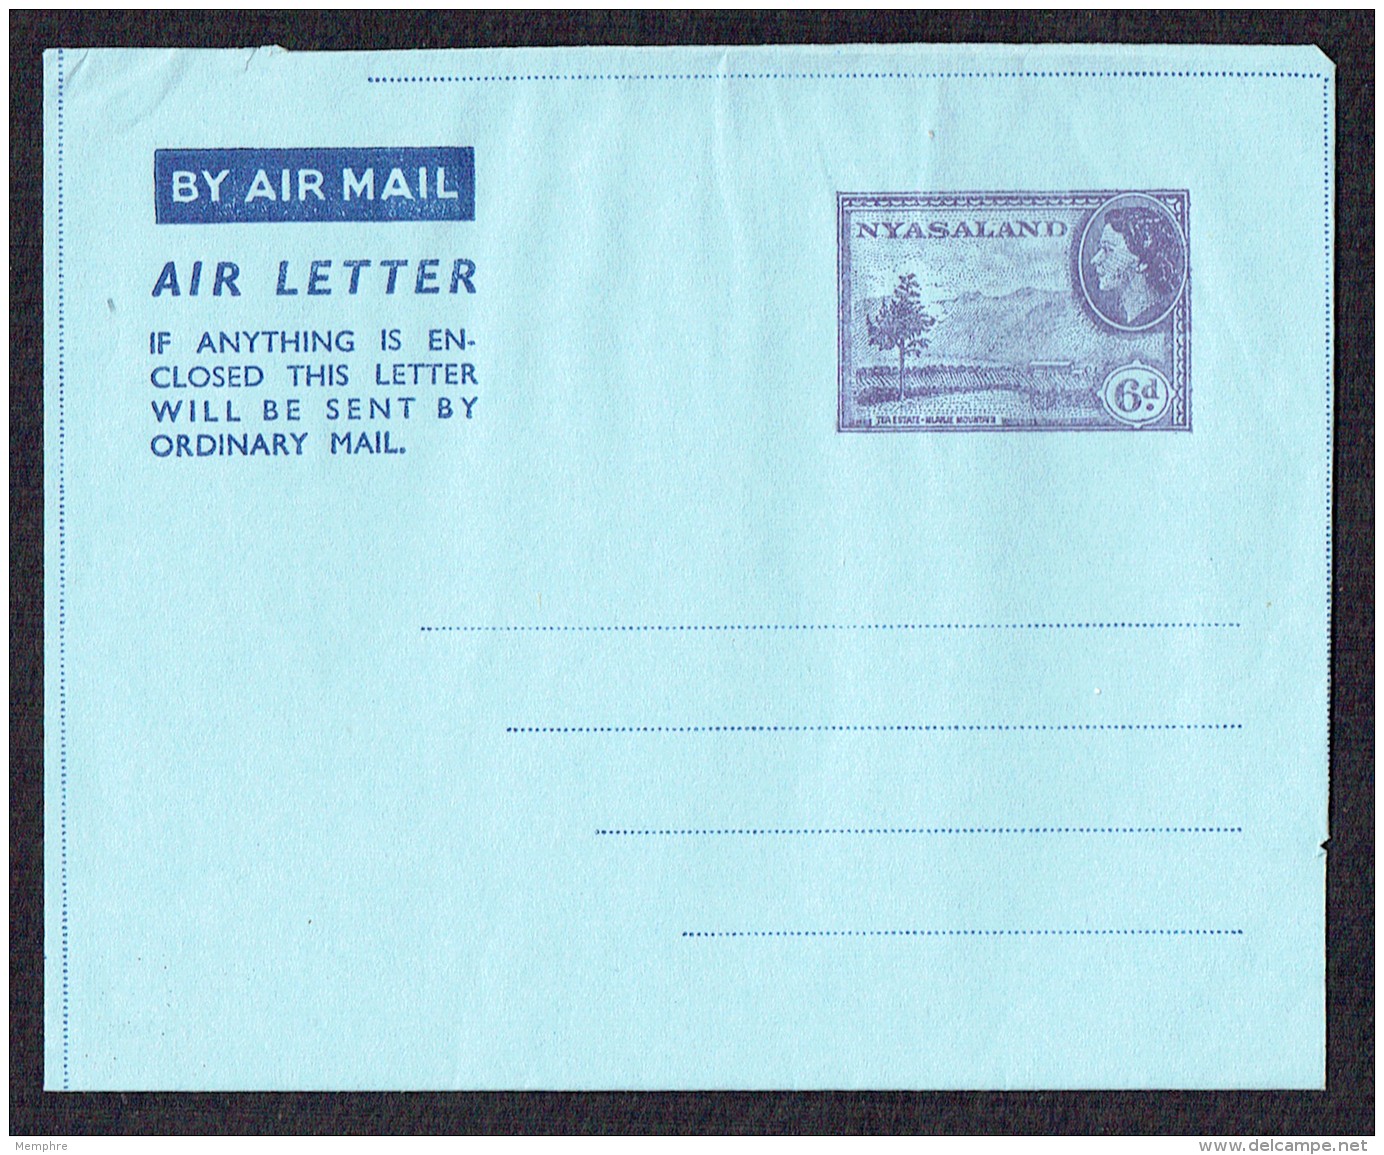 NYASSALAND  Qn Elizabeth 6d Air Letter - Unused - Nyassaland (1907-1953)